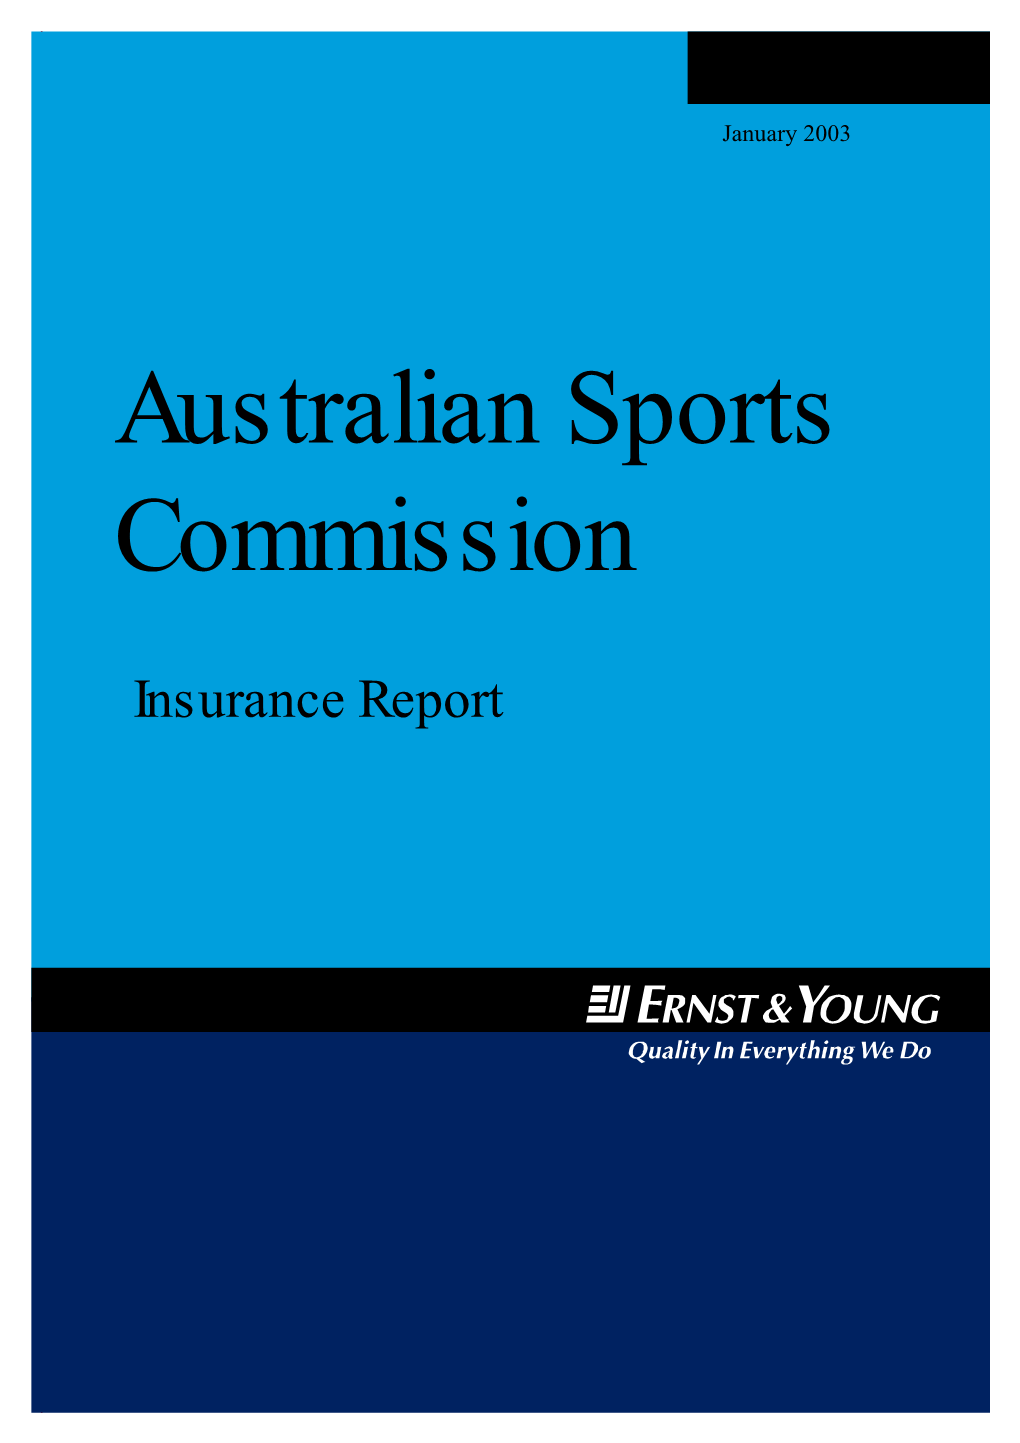 (2003). Australian Sports Commission : Insurance Report